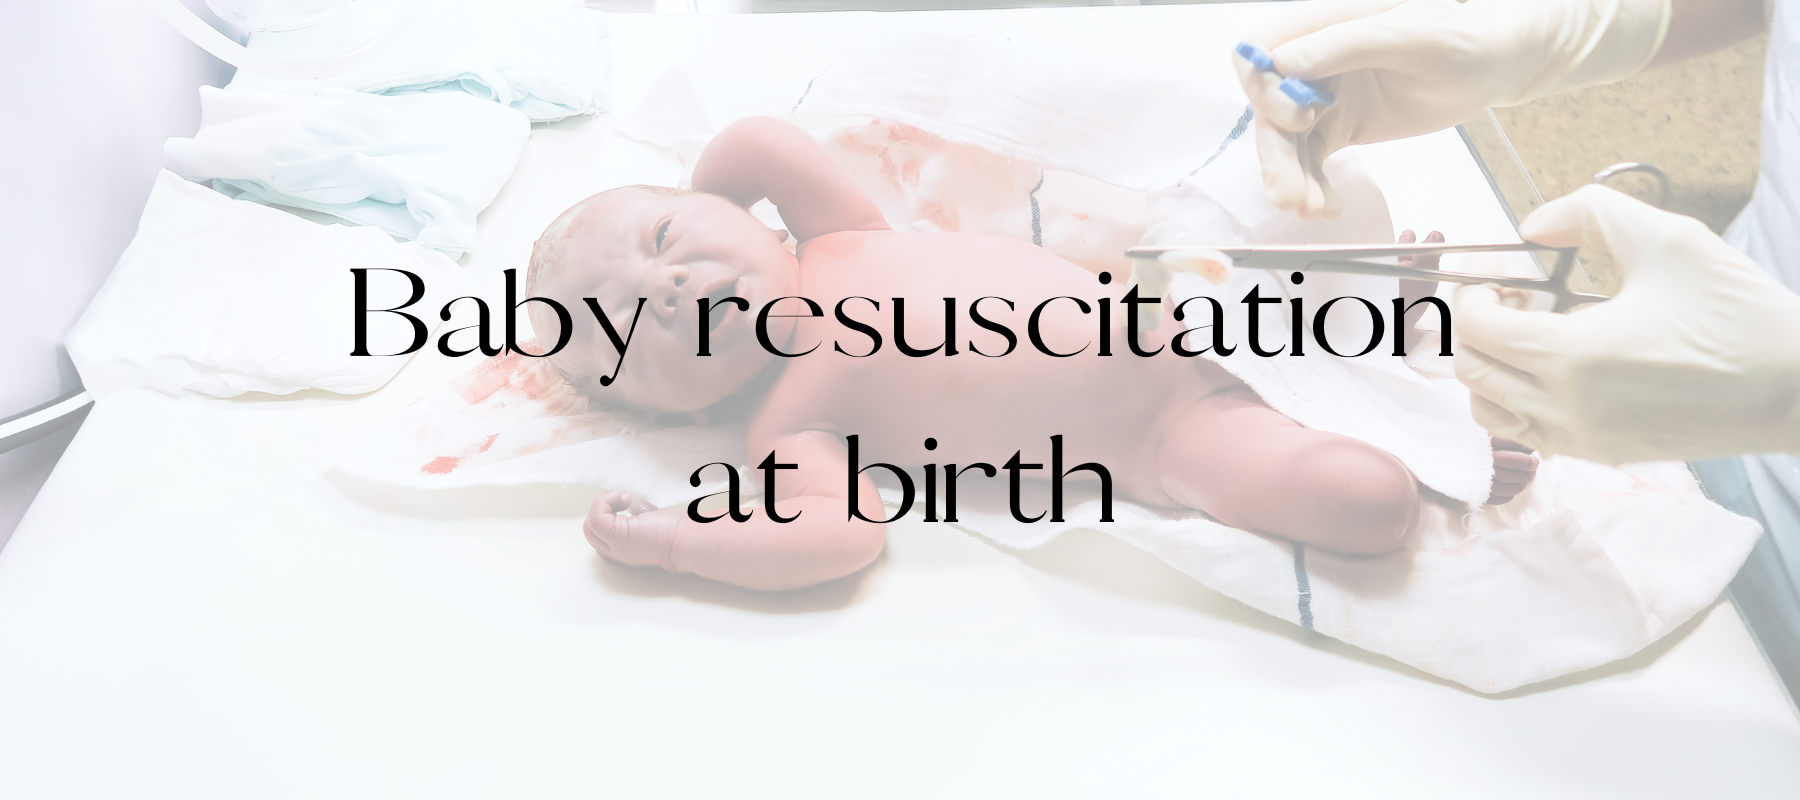 Baby resuscitation at birth